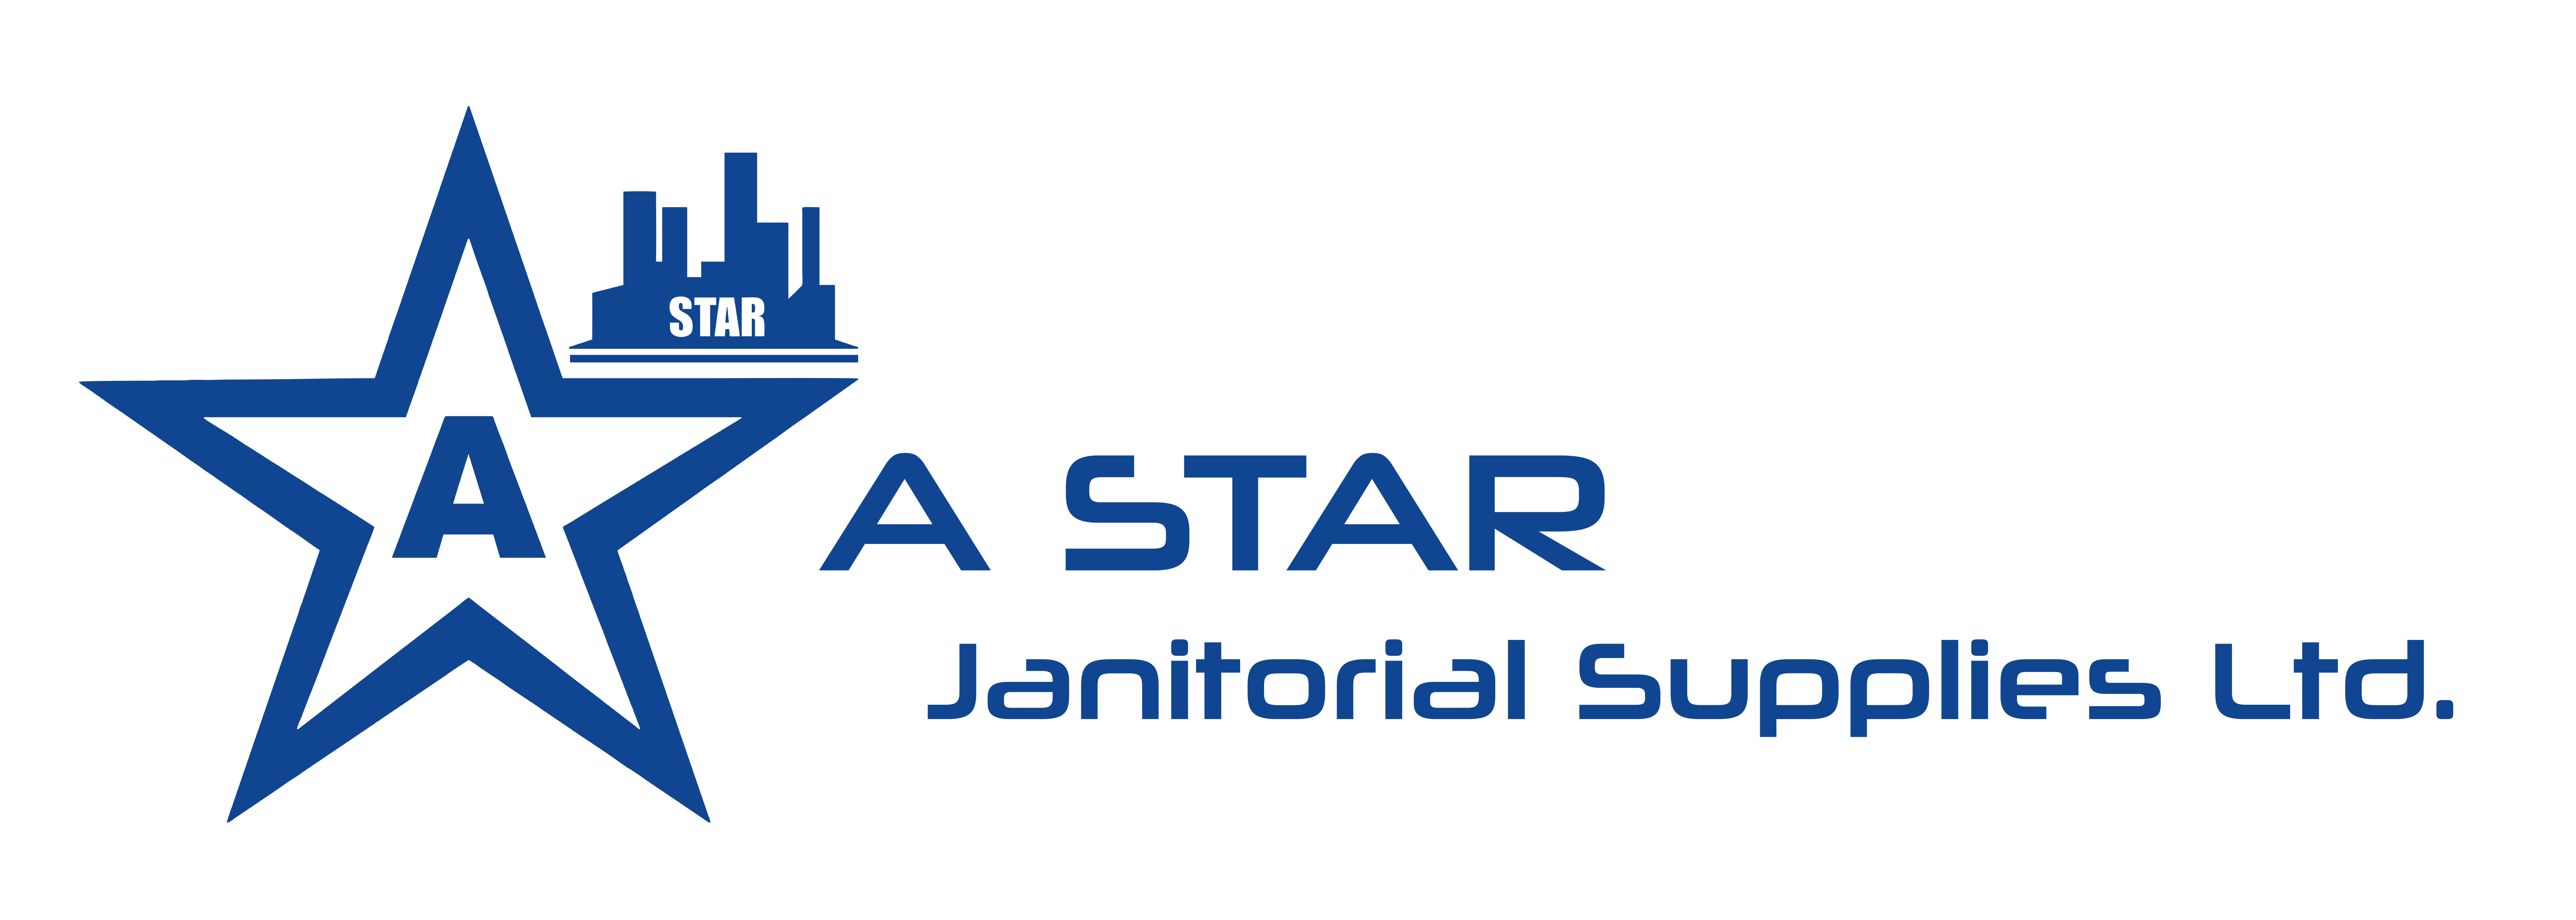 A Star Janitorial Supplies Ltd. Logo